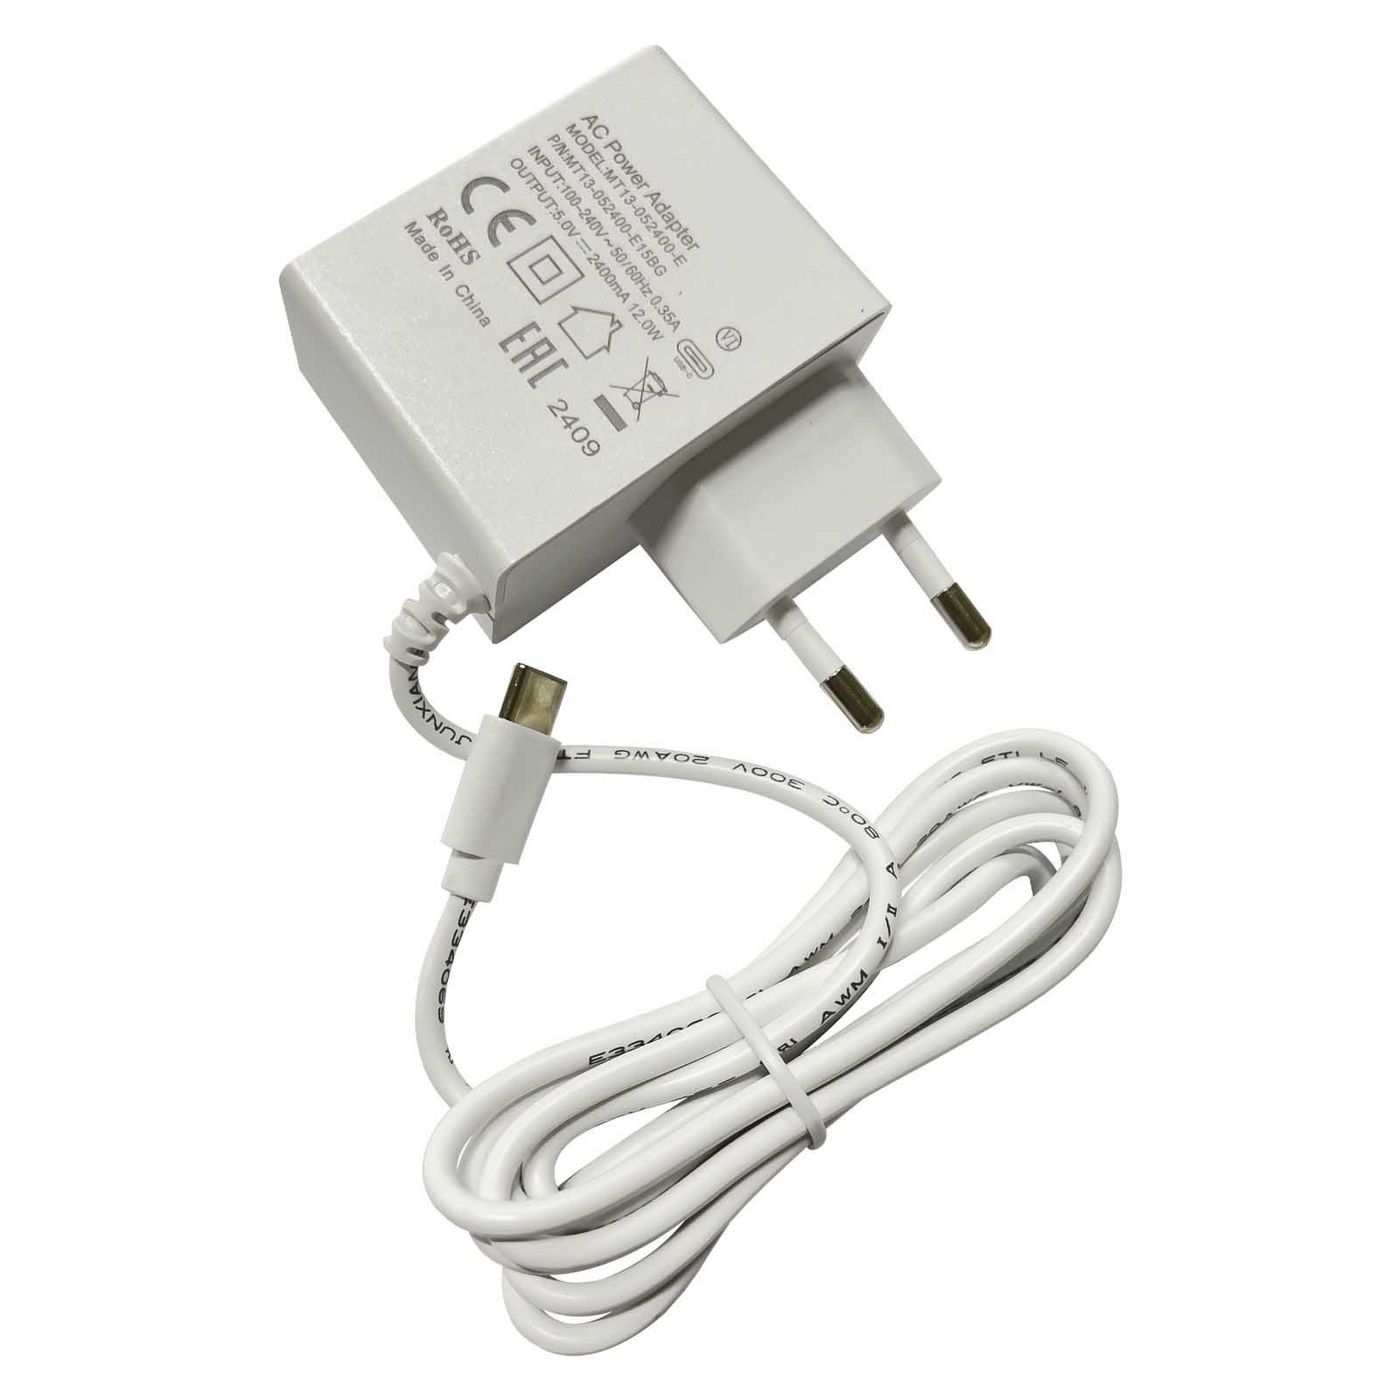 MikroTik MT13-052400-E15BG W128235168 5V 2.4A 12W USB power supply 